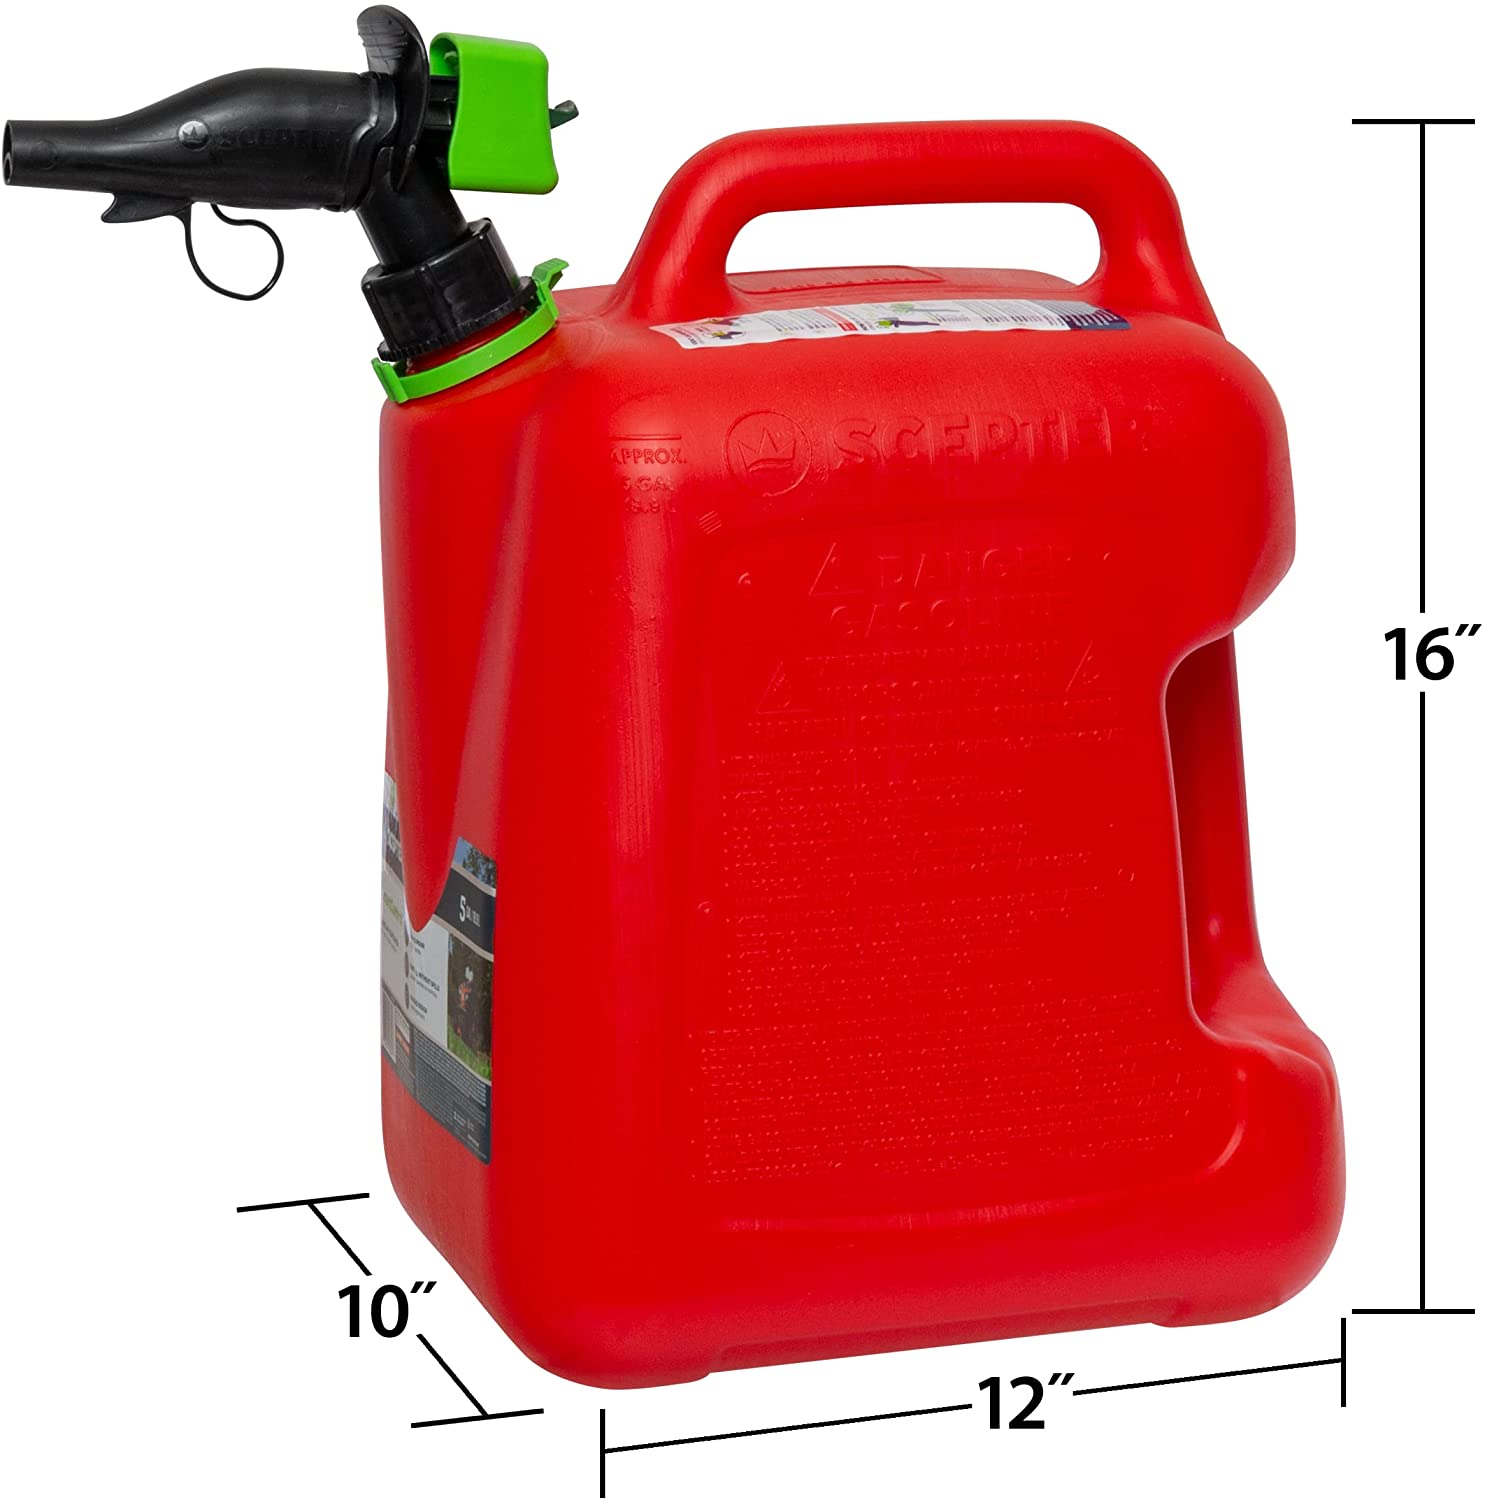 Red for sale online Scepter FR1G501 5 Gal SmartControl Gasoline Can 